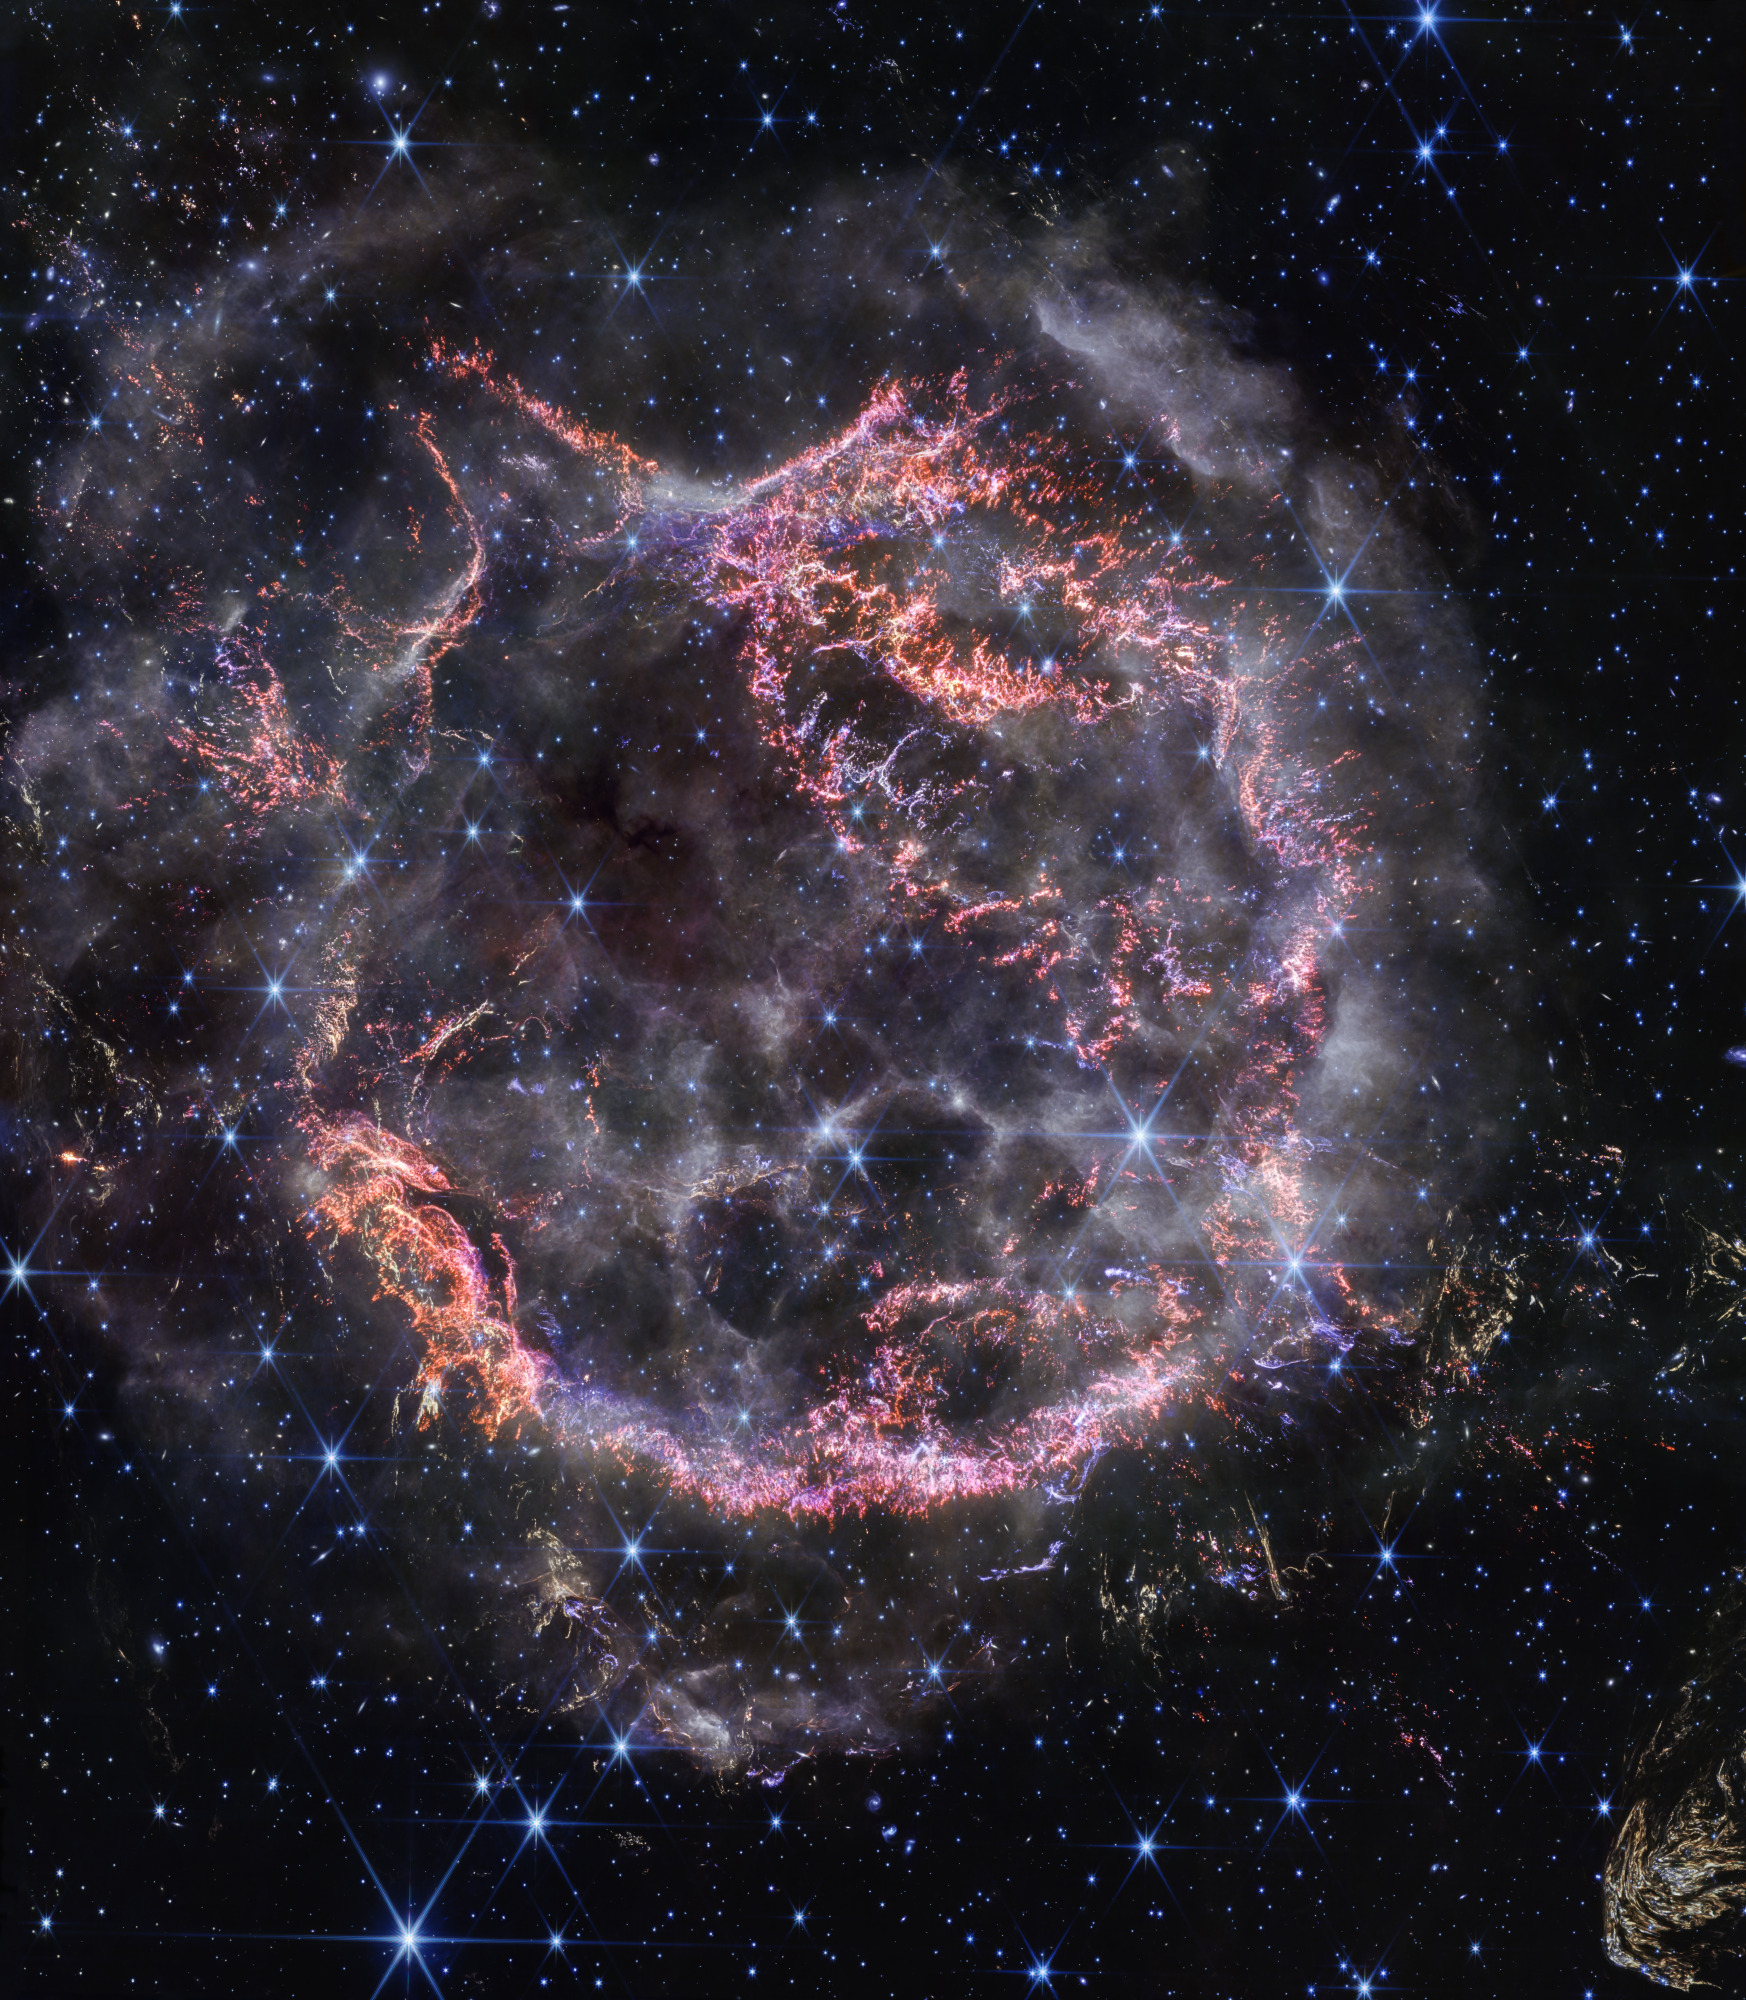 Image of the Cas A supernova remnant from JWST using NIRCam. Credit: NASA, ESA, CSA, STScI, Danny Milisavljevic (Purdue University), Ilse De Looze (UGent), Tea Temim (Princeton University)